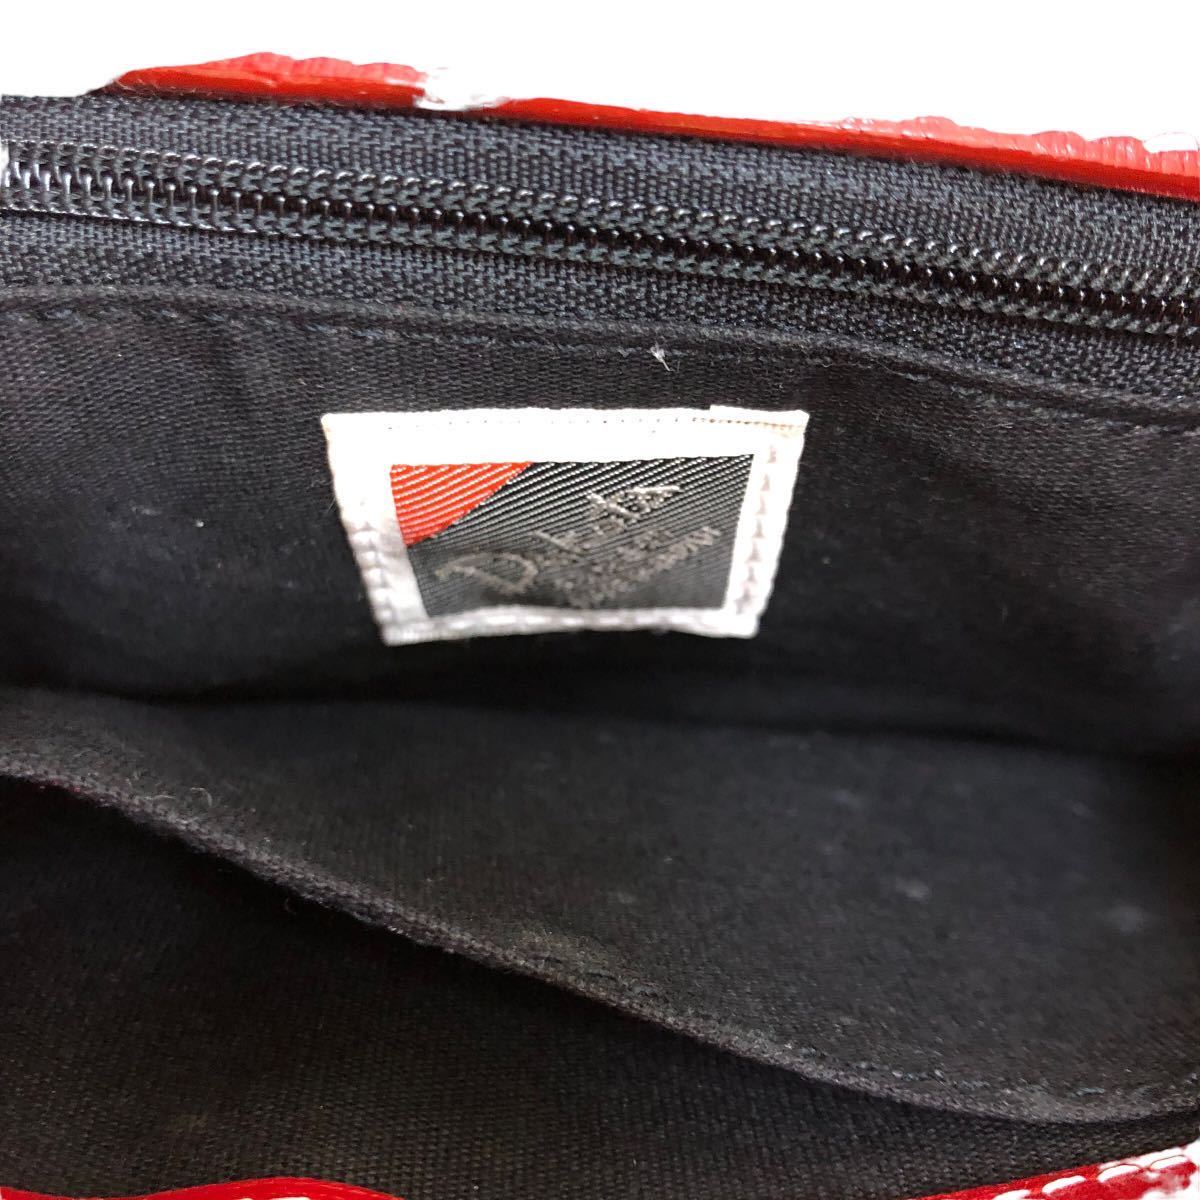 h036 本革 Dakota ダコタ レザー ハンドバッグ ミニ バッグ 赤 レッド 手持ち 小さめ 鞄 カバン bag レディース 良品の画像10